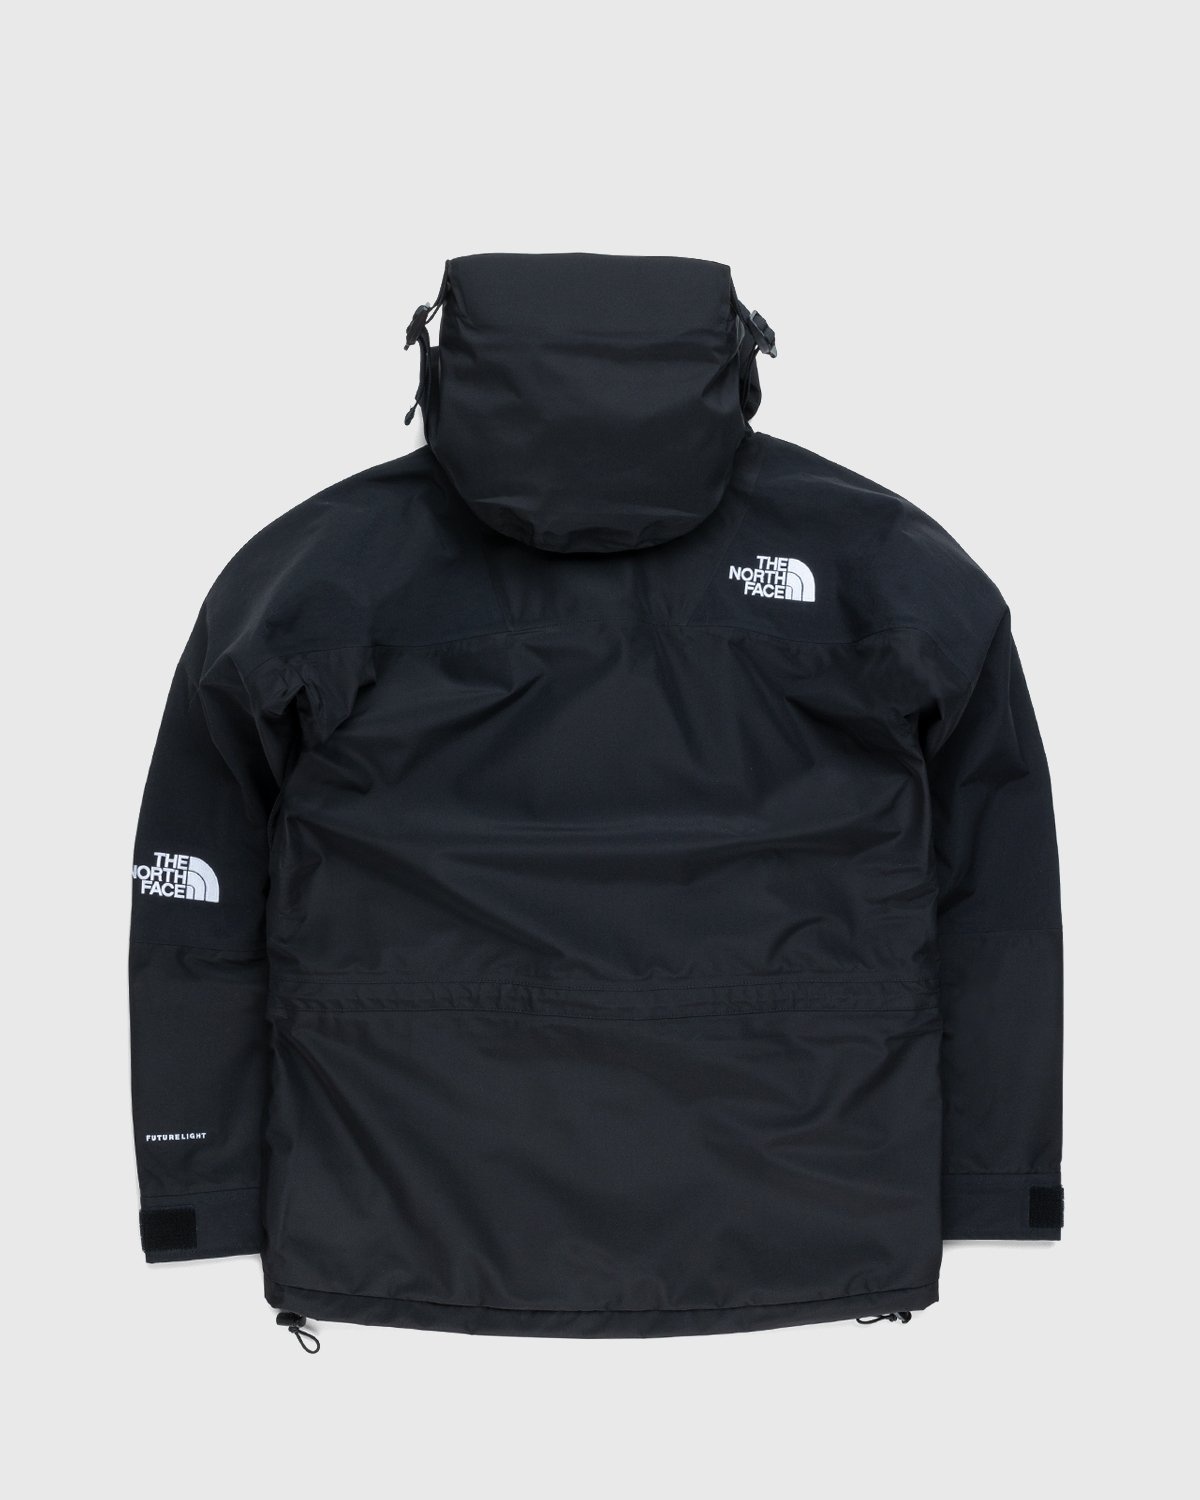 The North Face – 1994 Retro Mountain Light Jacket Black